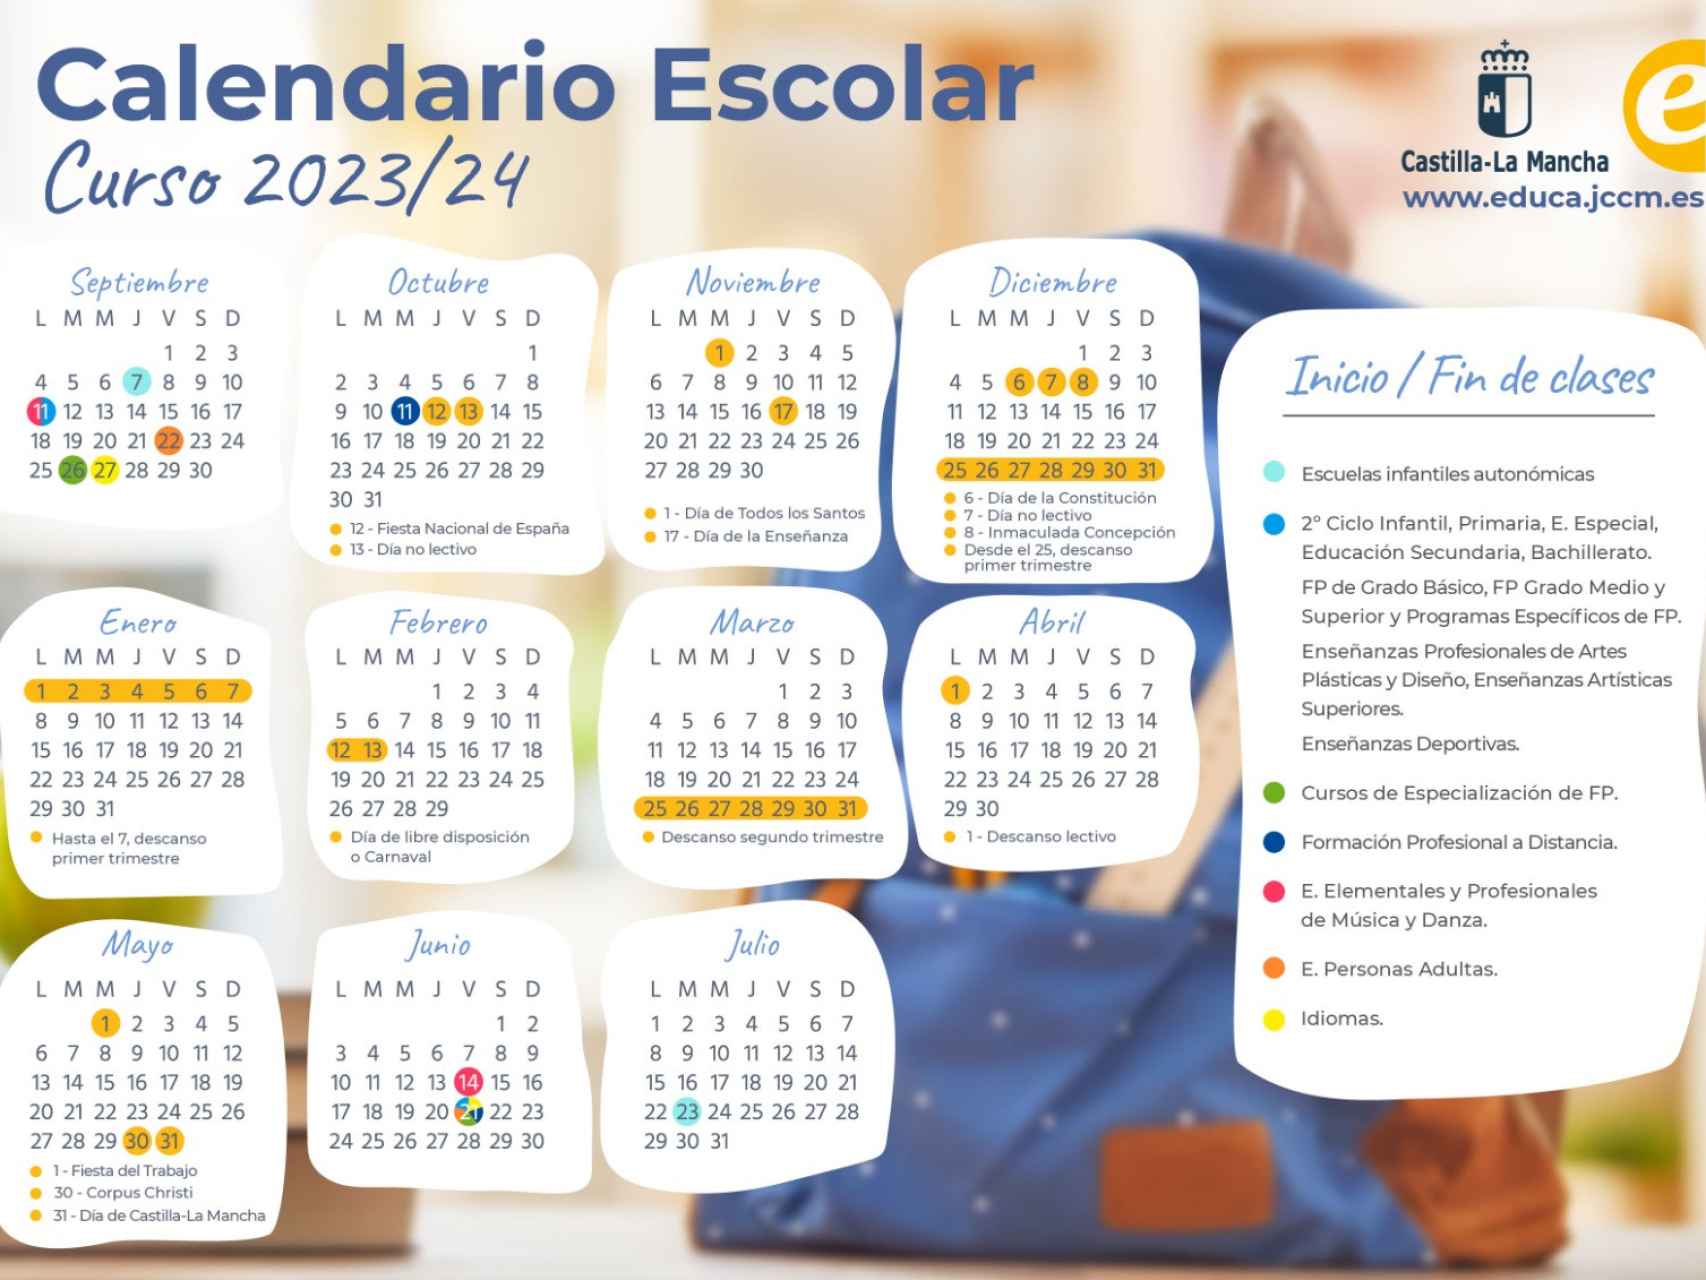 Calendario escolar Castilla-La Mancha 2023-24